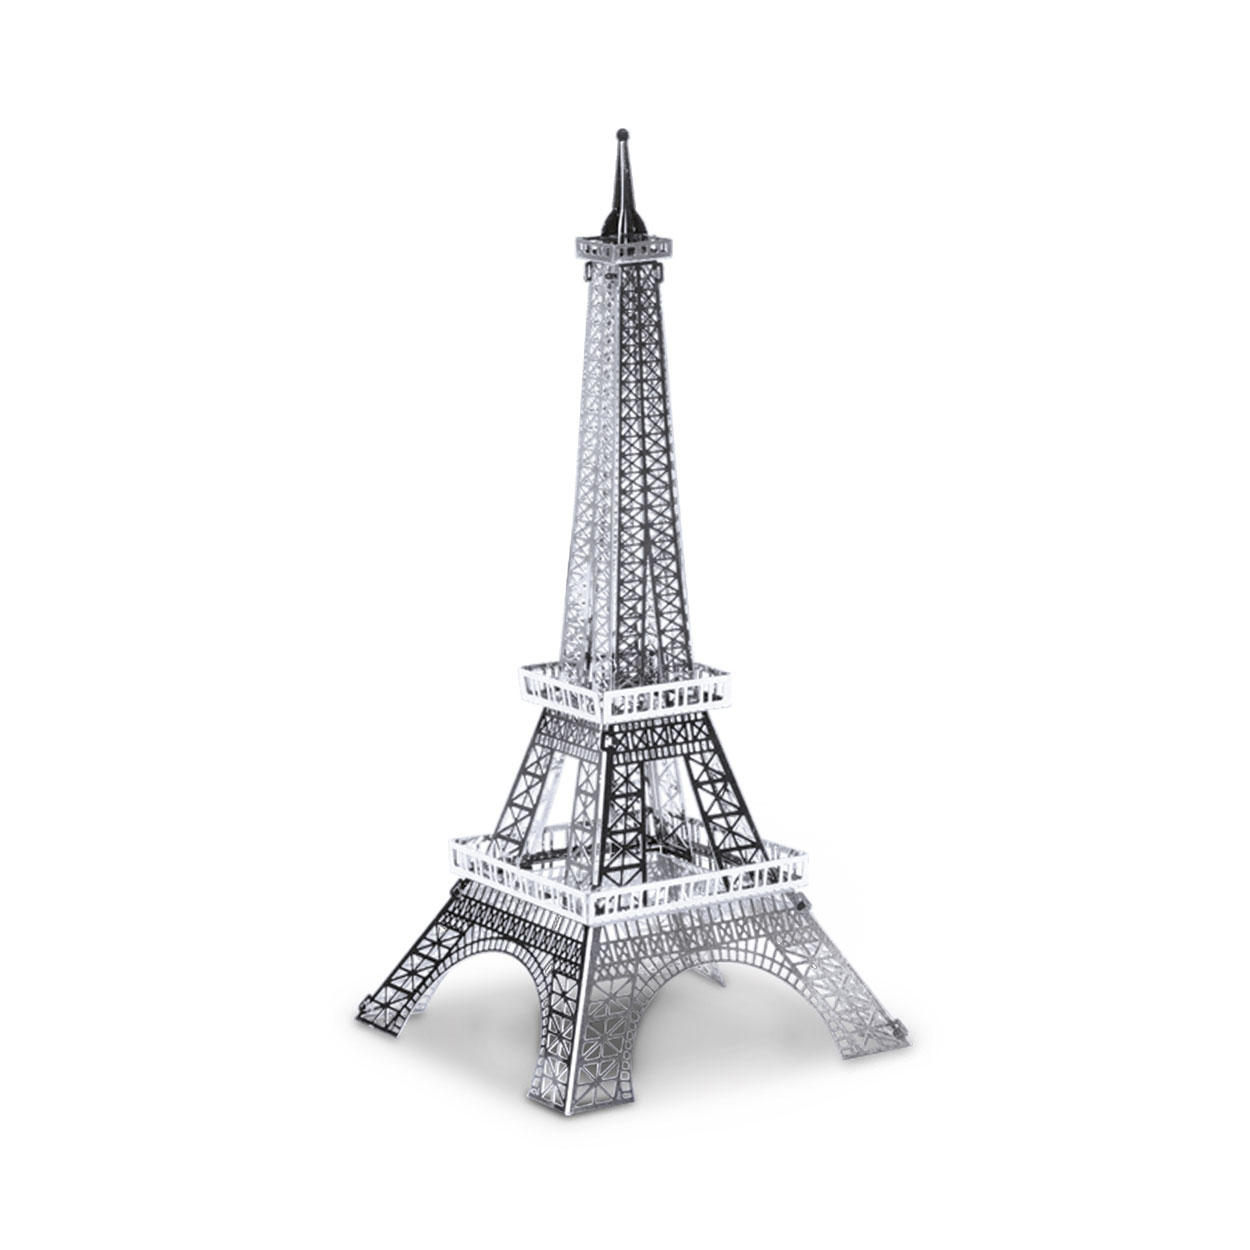 Metall-Erde-Eiffelturm